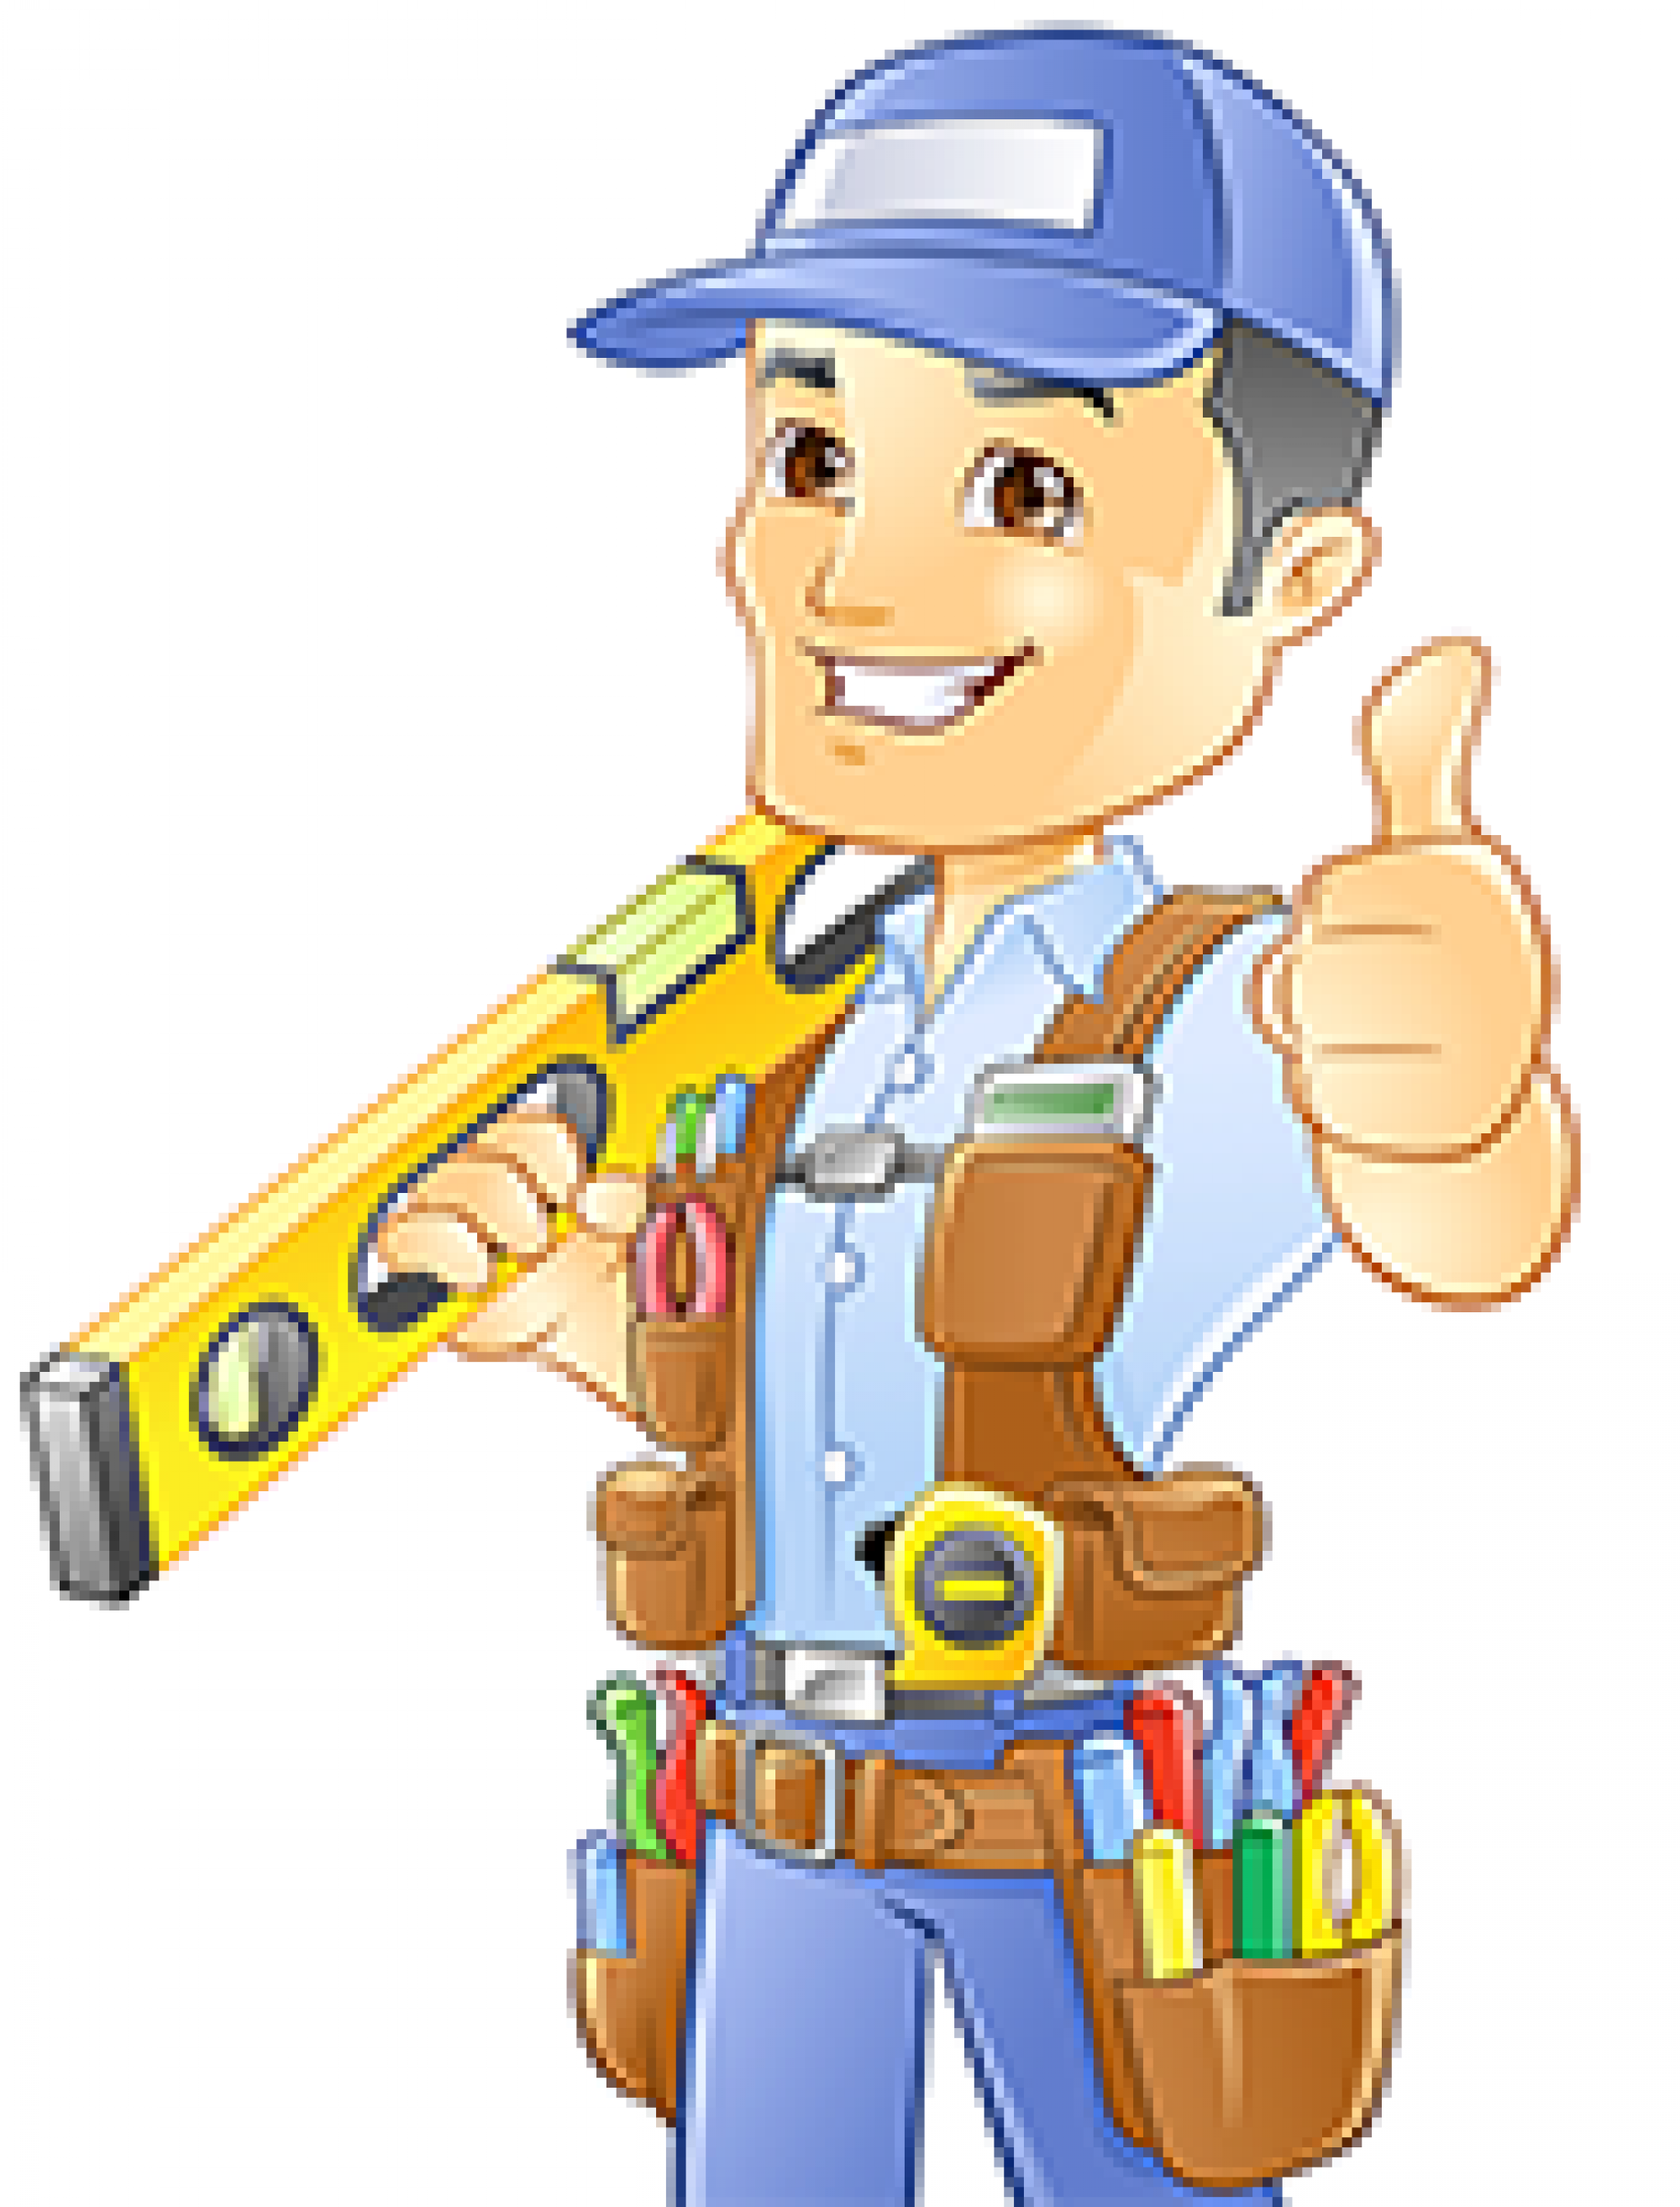 handyman service